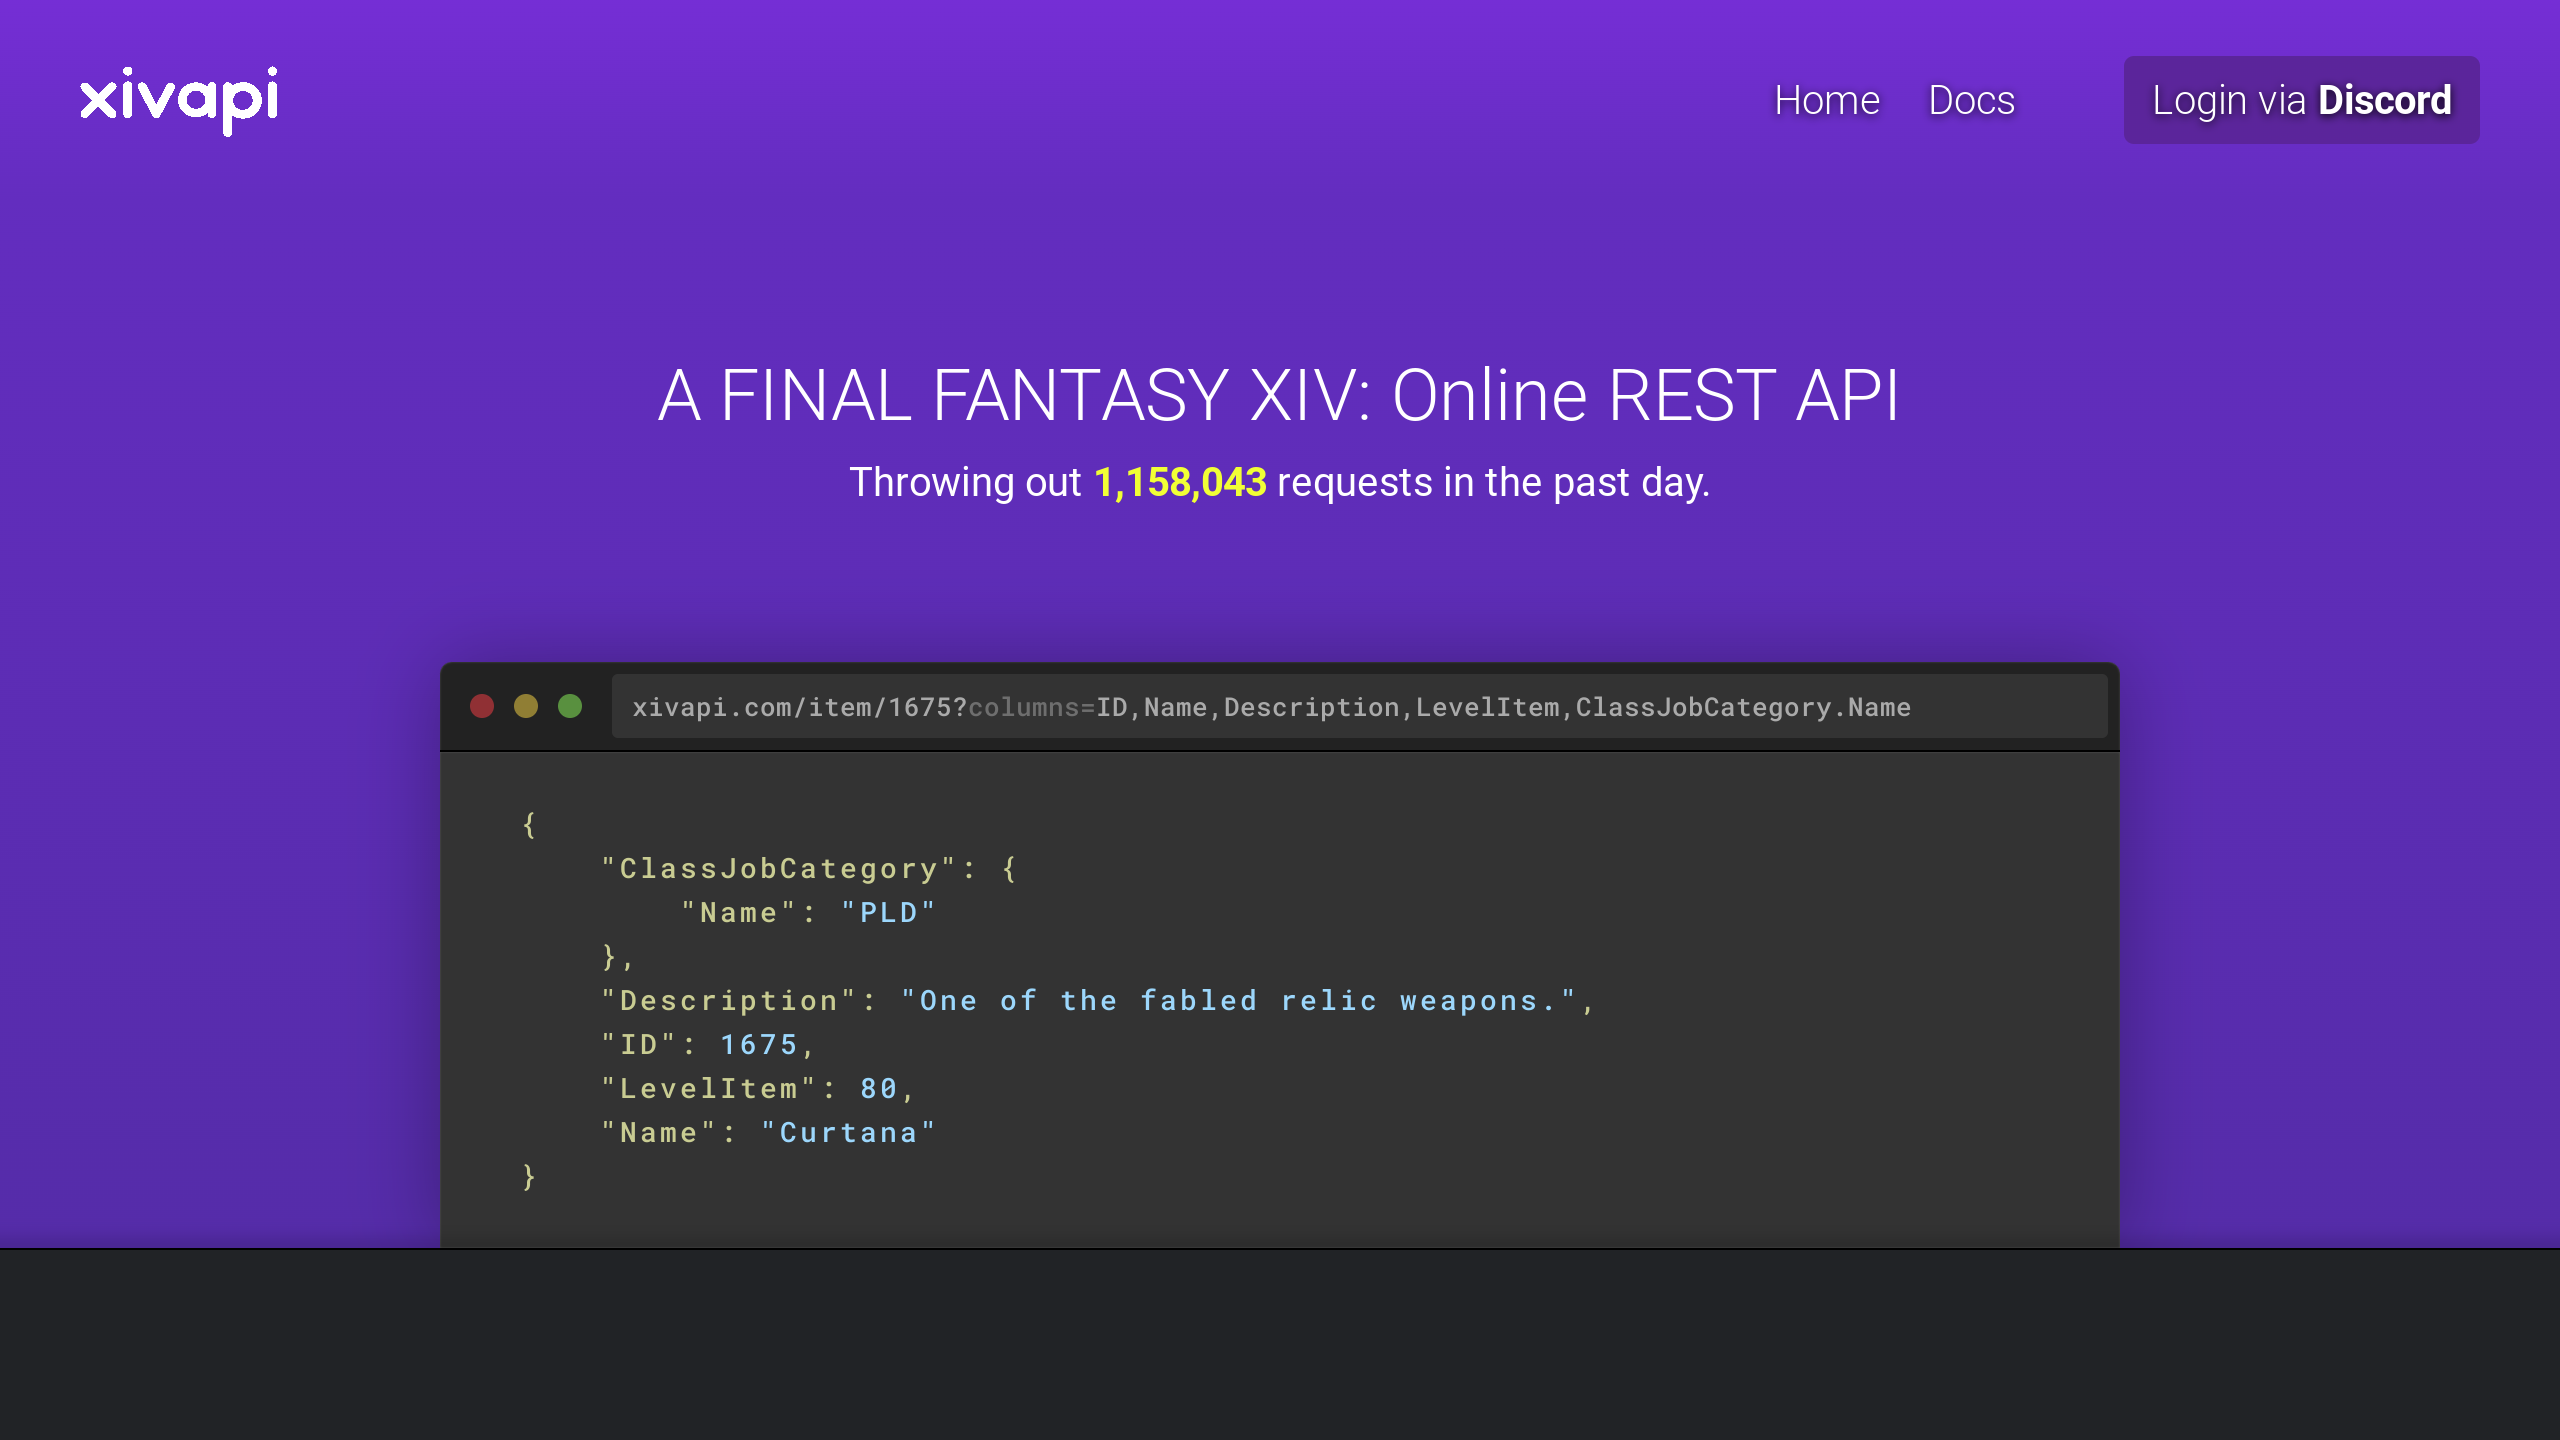 Final Fantasy XIV's website screenshot